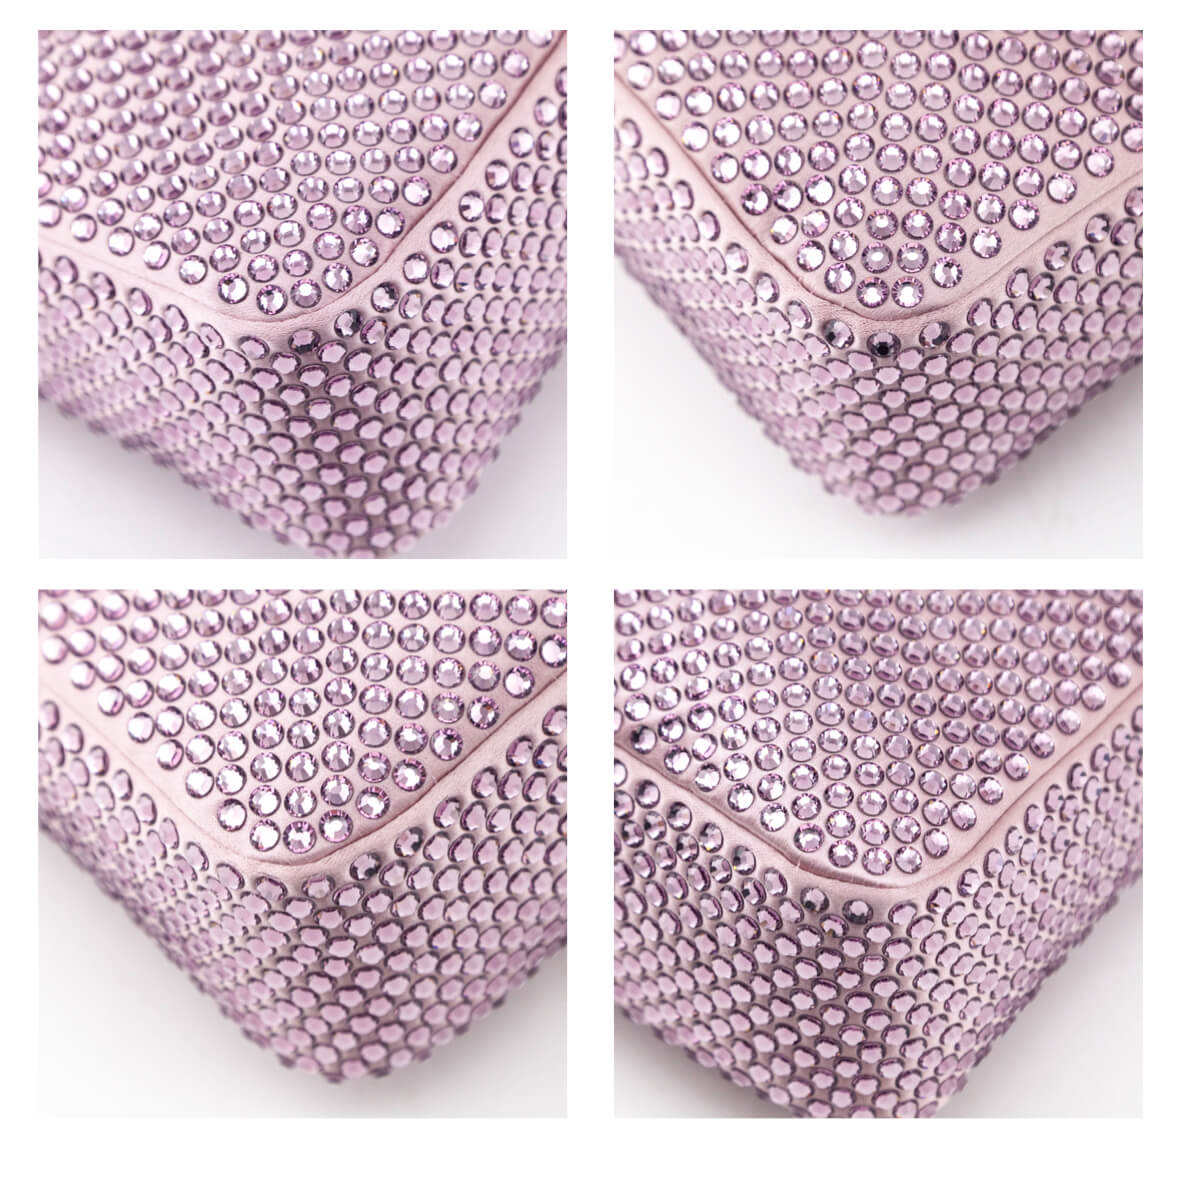 Prada Alabaster Pink Satin Crystal Mini Re-Edition 2000 - Love that Bag etc - Preowned Authentic Designer Handbags & Preloved Fashions